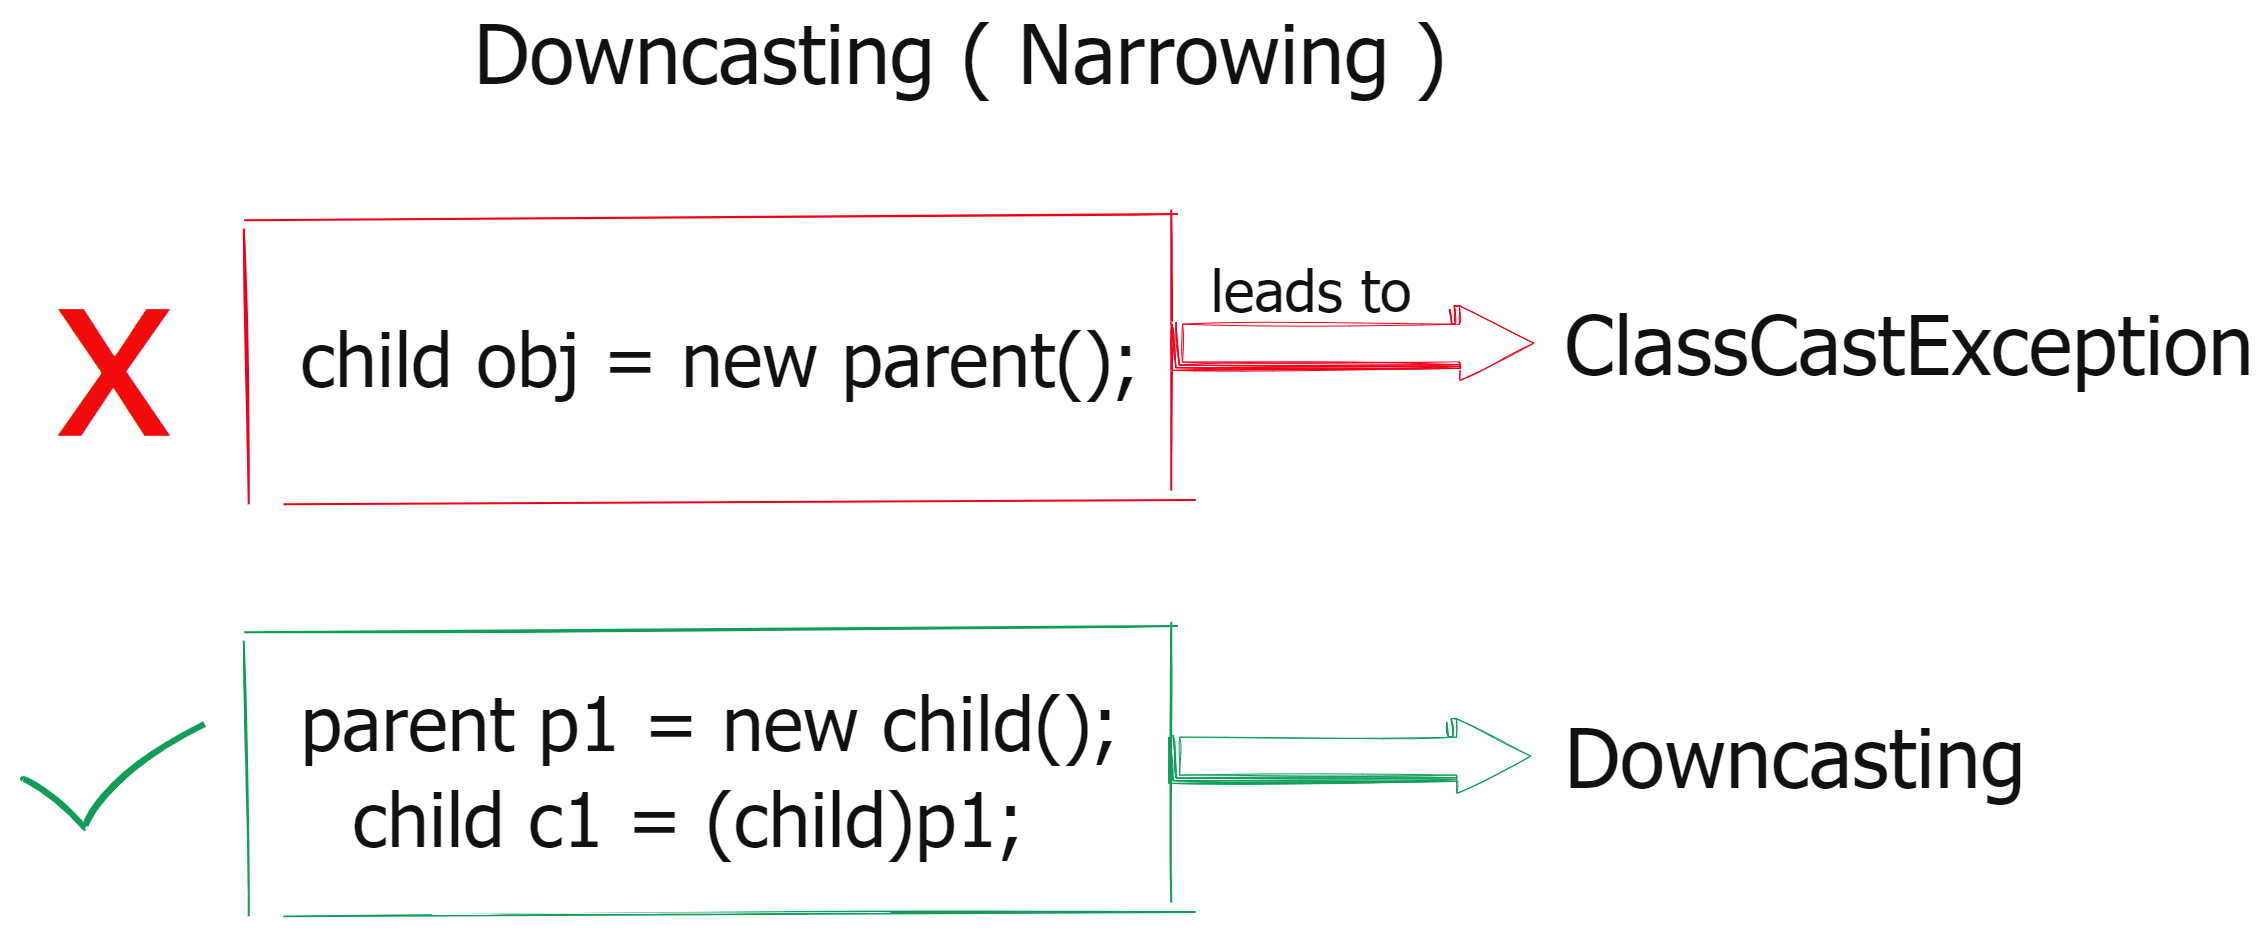 Downcasting Narrowing In Java